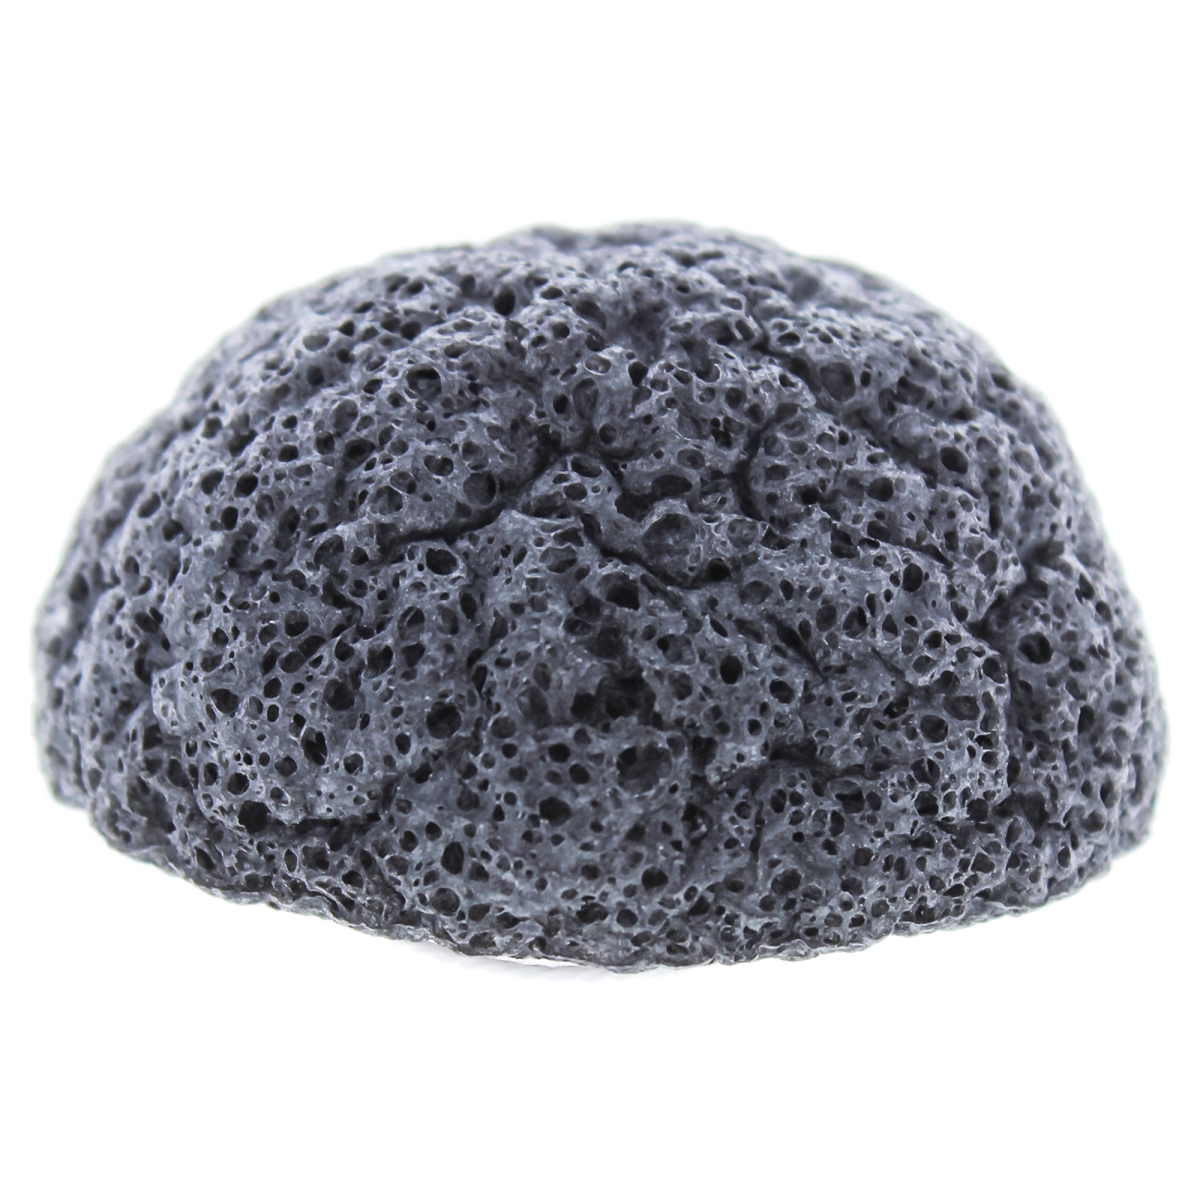 I0087396 Charcoal Konjac Sponge For Women - 3.5 Oz